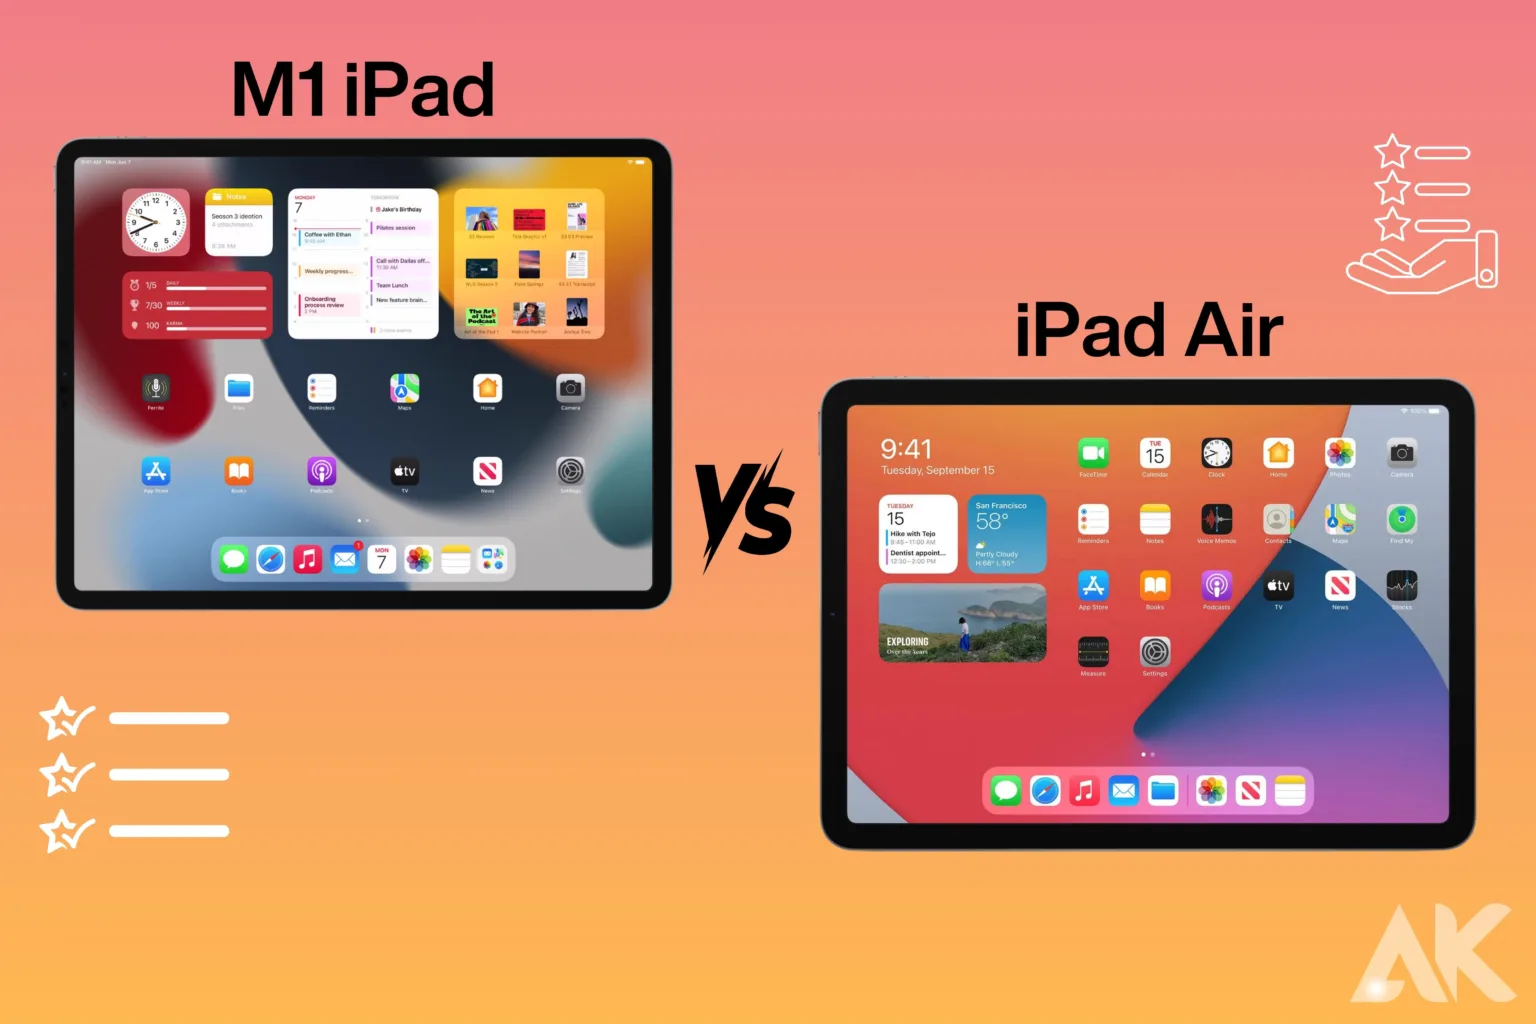 iPad Air vs M1 iPad features